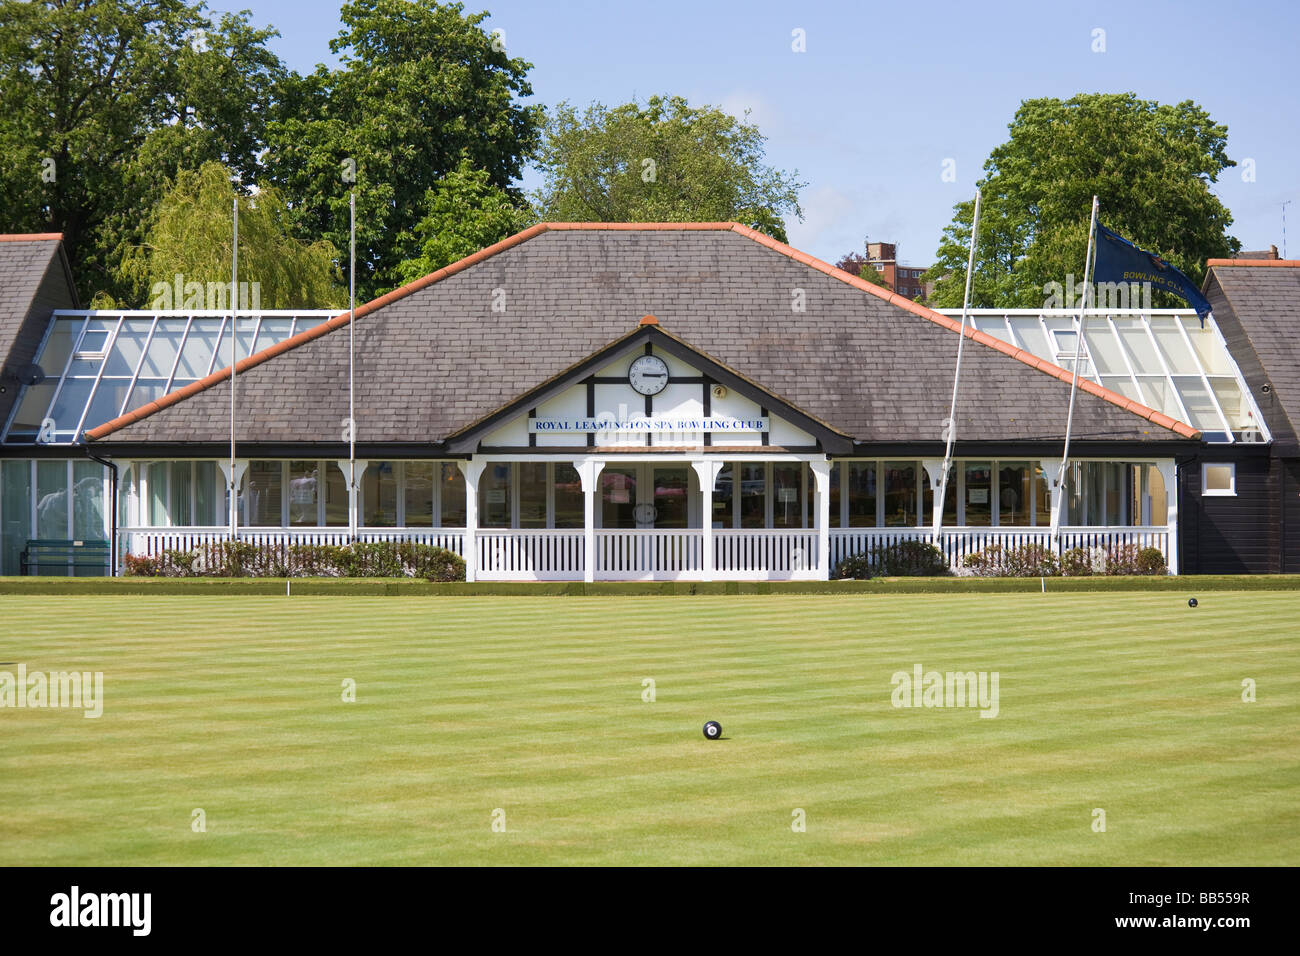 Le club de Royal Leamington Spa Bowling Club, Leamington Spa, Warwickshire, England, UK Banque D'Images